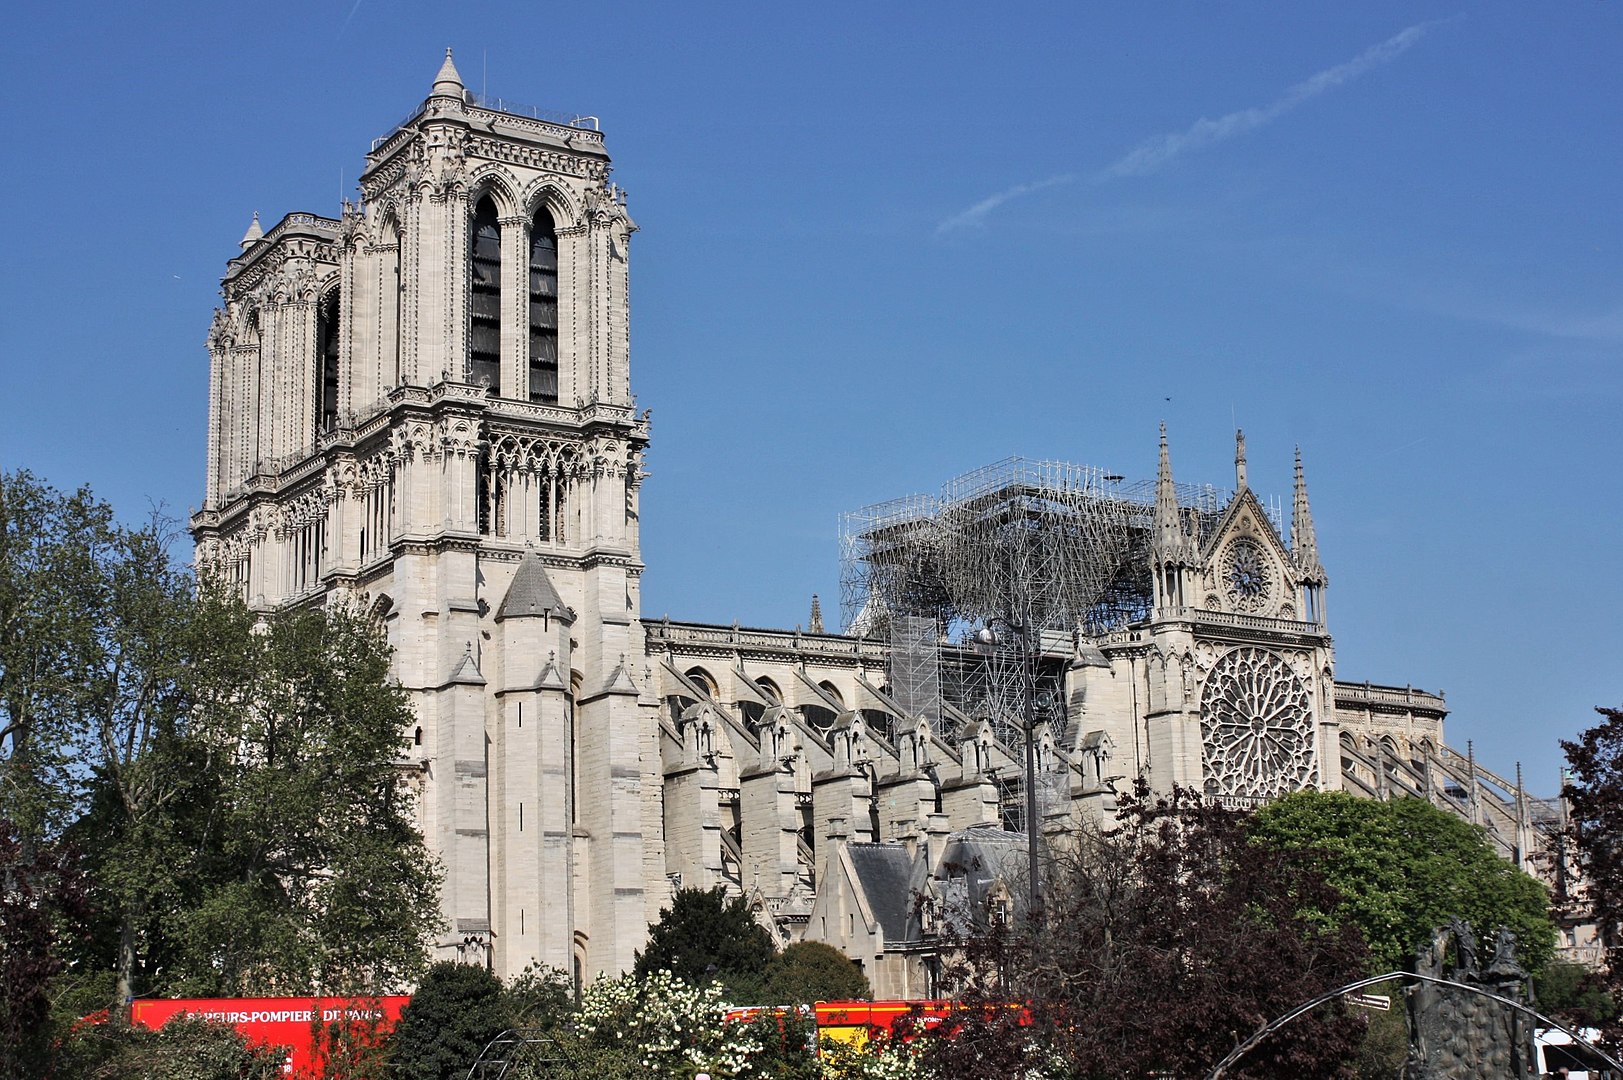 Notre-Dame de Paris on 19 April 2019 © Arthur Weidmann - licence [CC BY-SA 2.0] from Wikimedia Commons